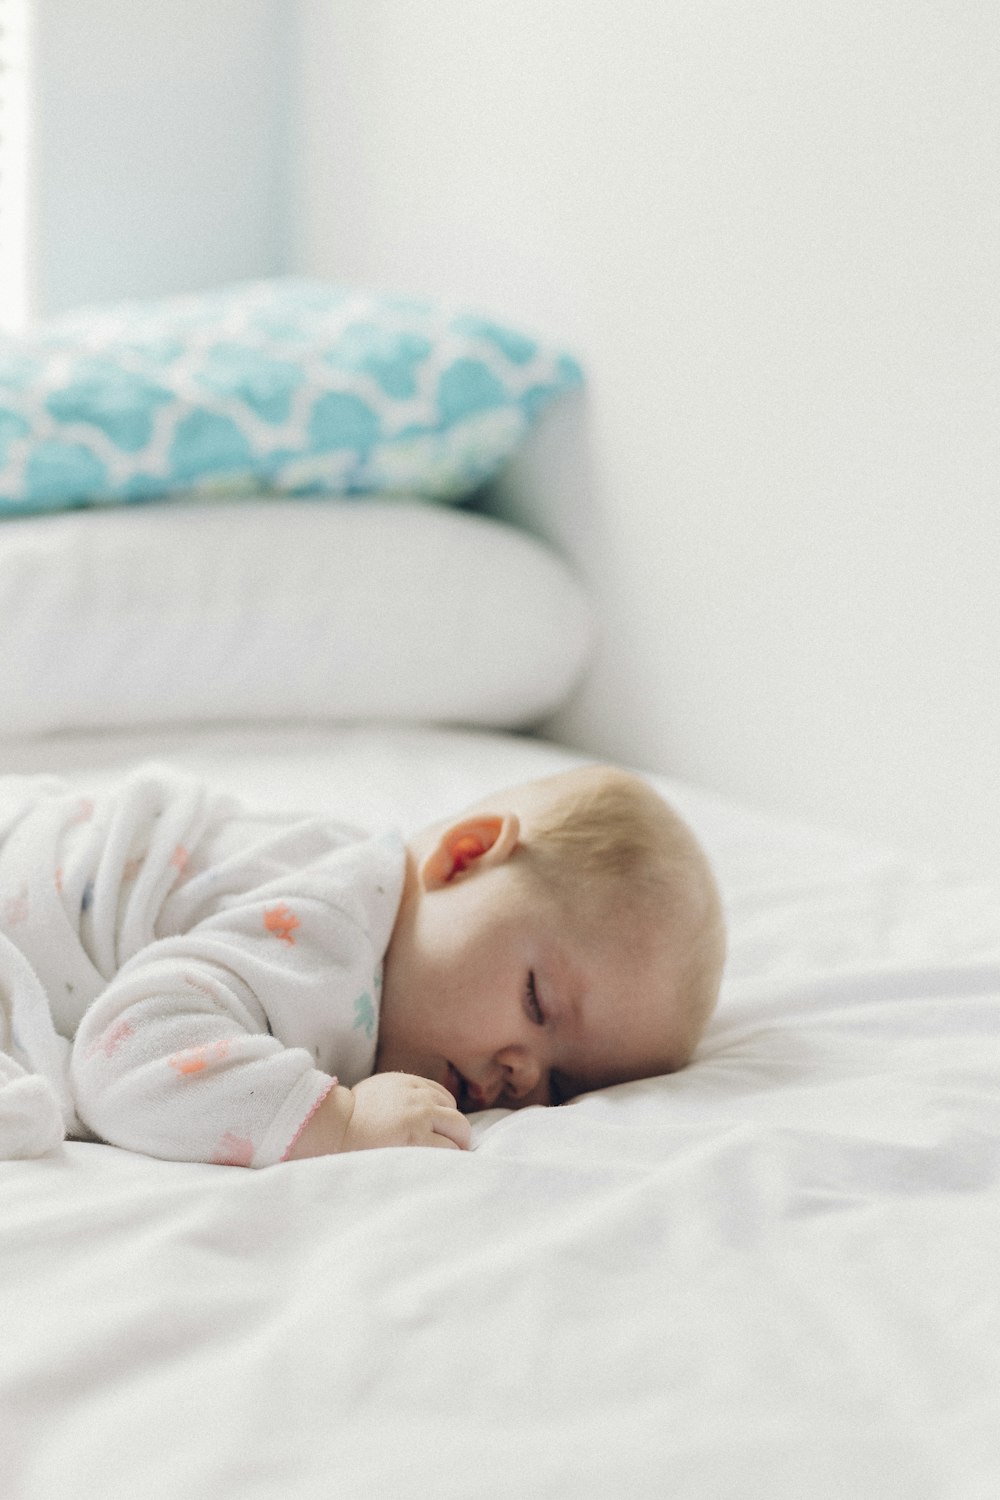 Getting Your Baby To Sleep - The Easiest Ways To Help Your Baby Sleep